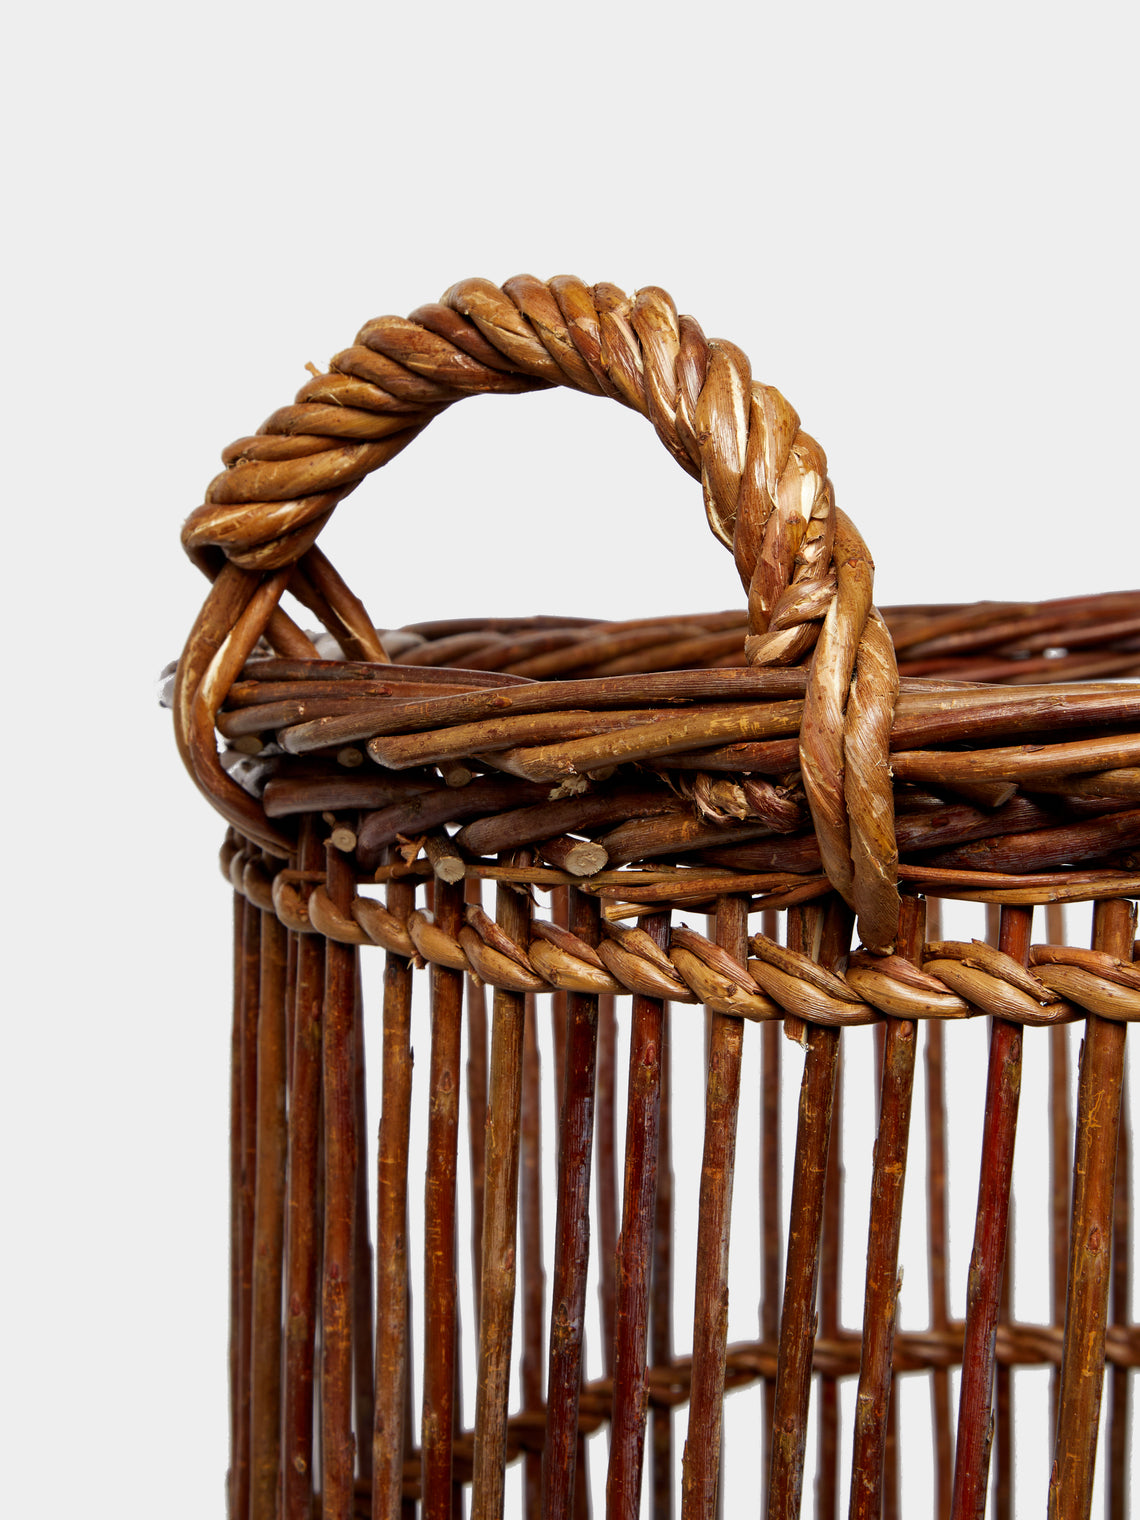 Benjamin Nauleau - Handwoven Willow Laundry Basket -  - ABASK